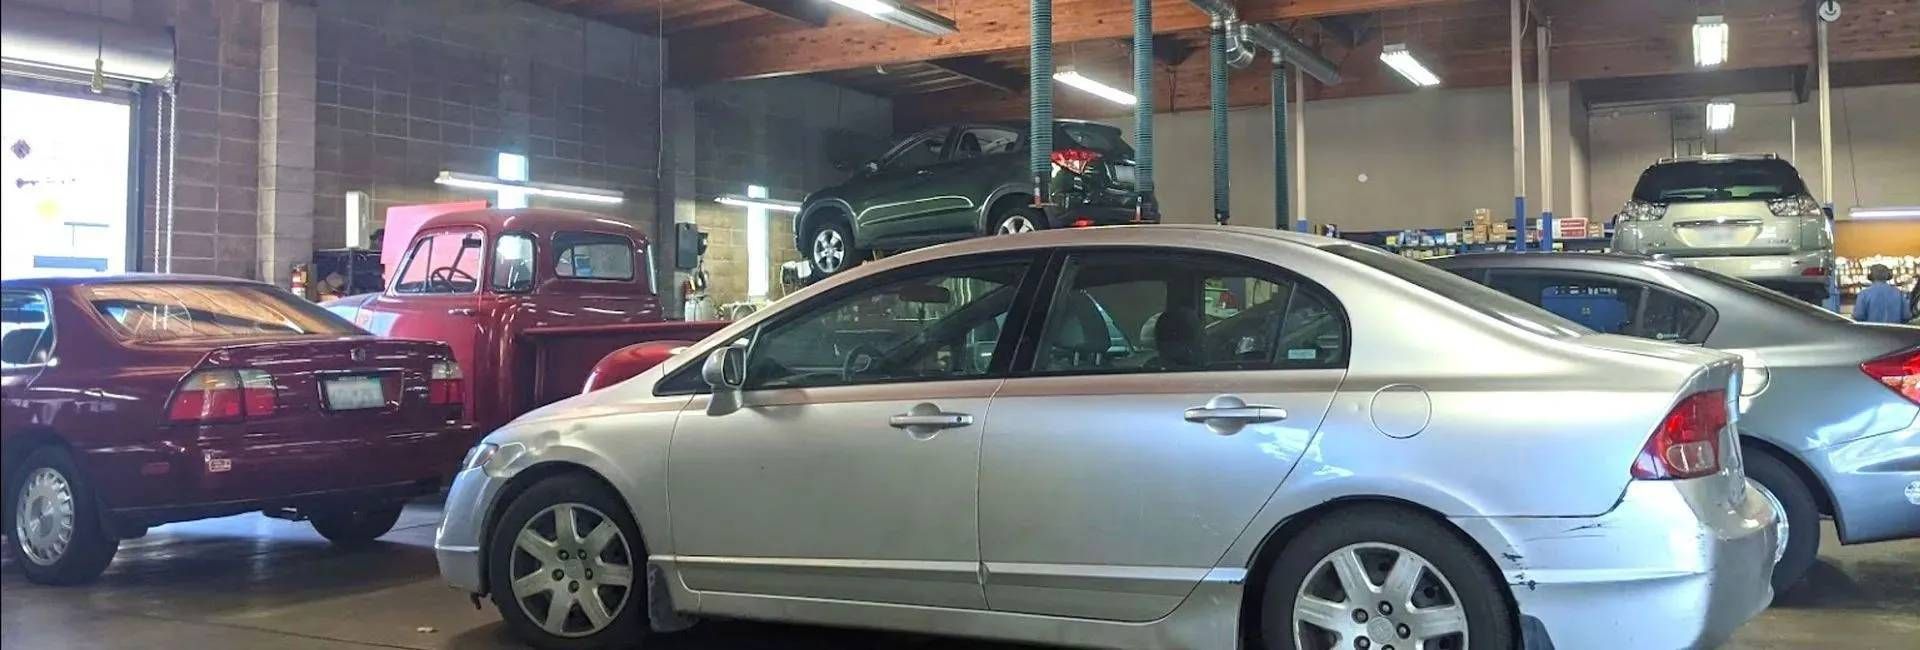 vehicles at our auto repair shop | Berkeley Minicar